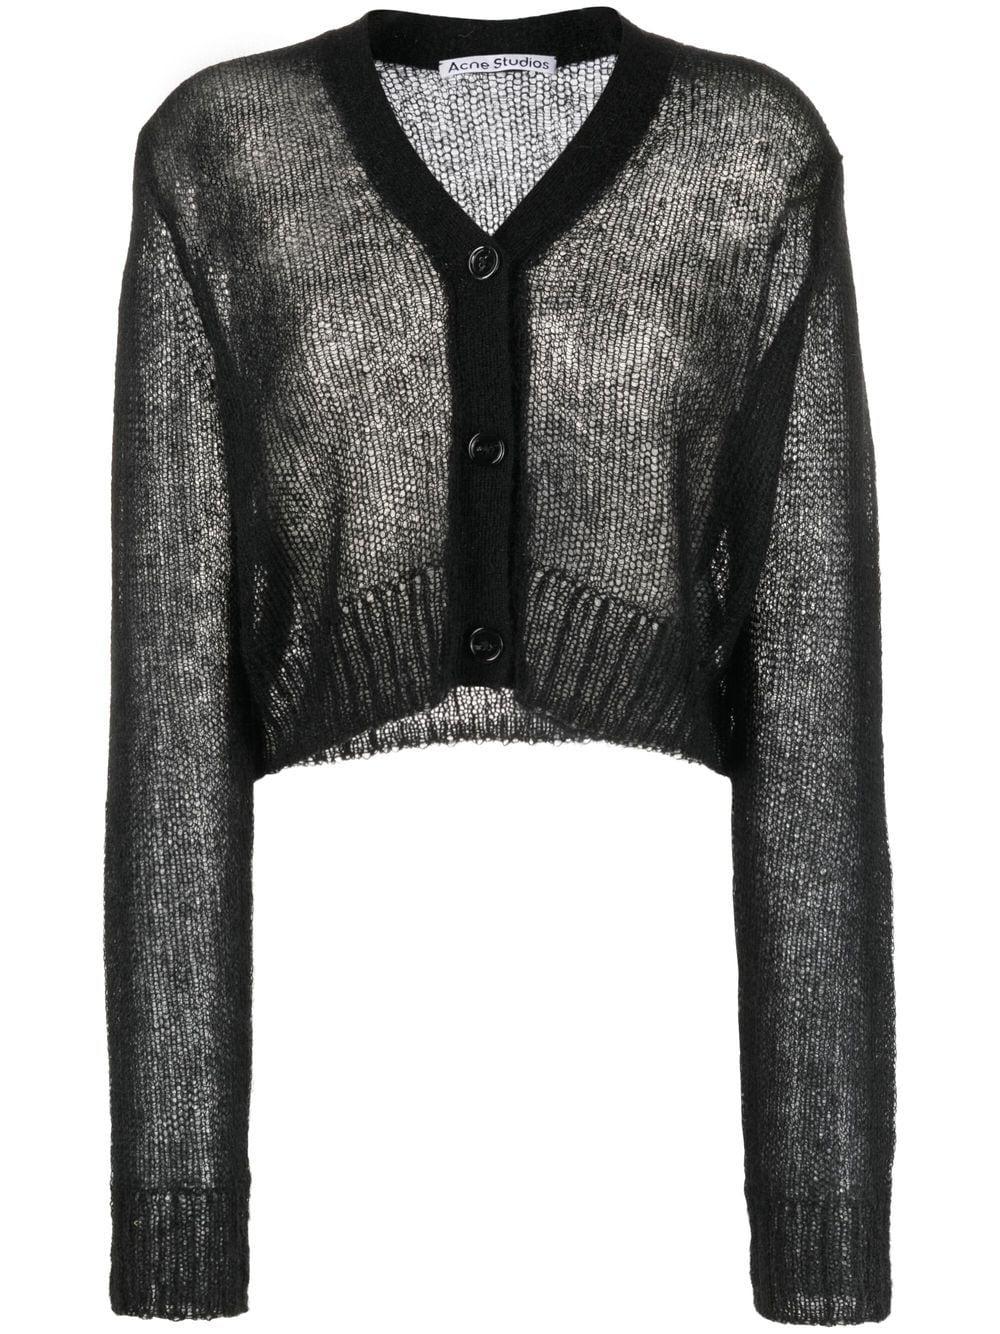 Acne Studios Cropped Mohair-wool Cardigan in Black | Lyst